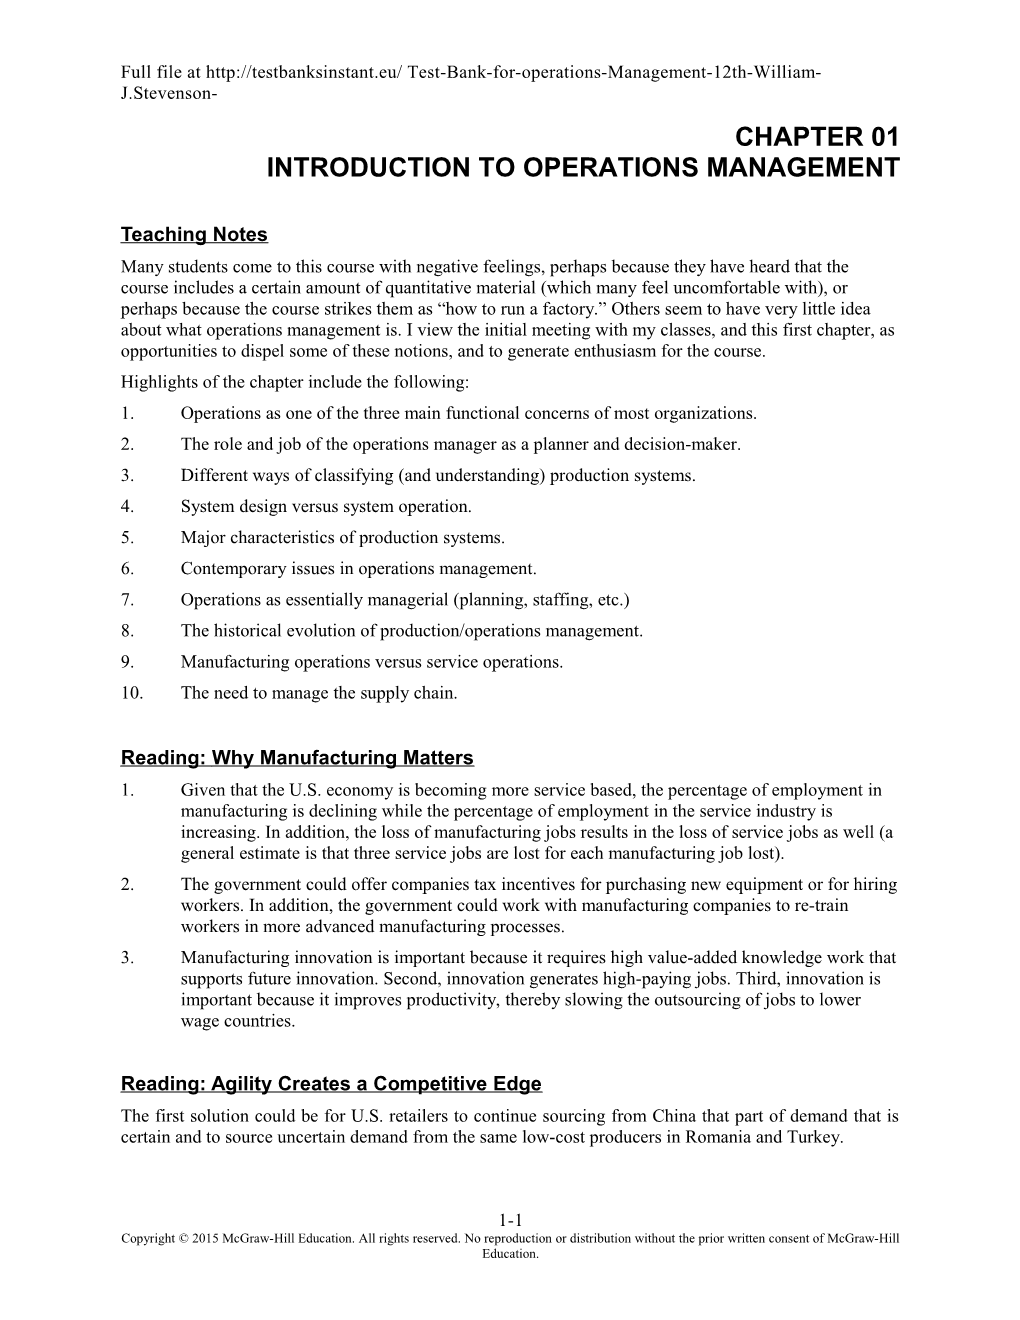 Full File at Test-Bank-For-Operations-Management-12Th-William-J.Stevenson